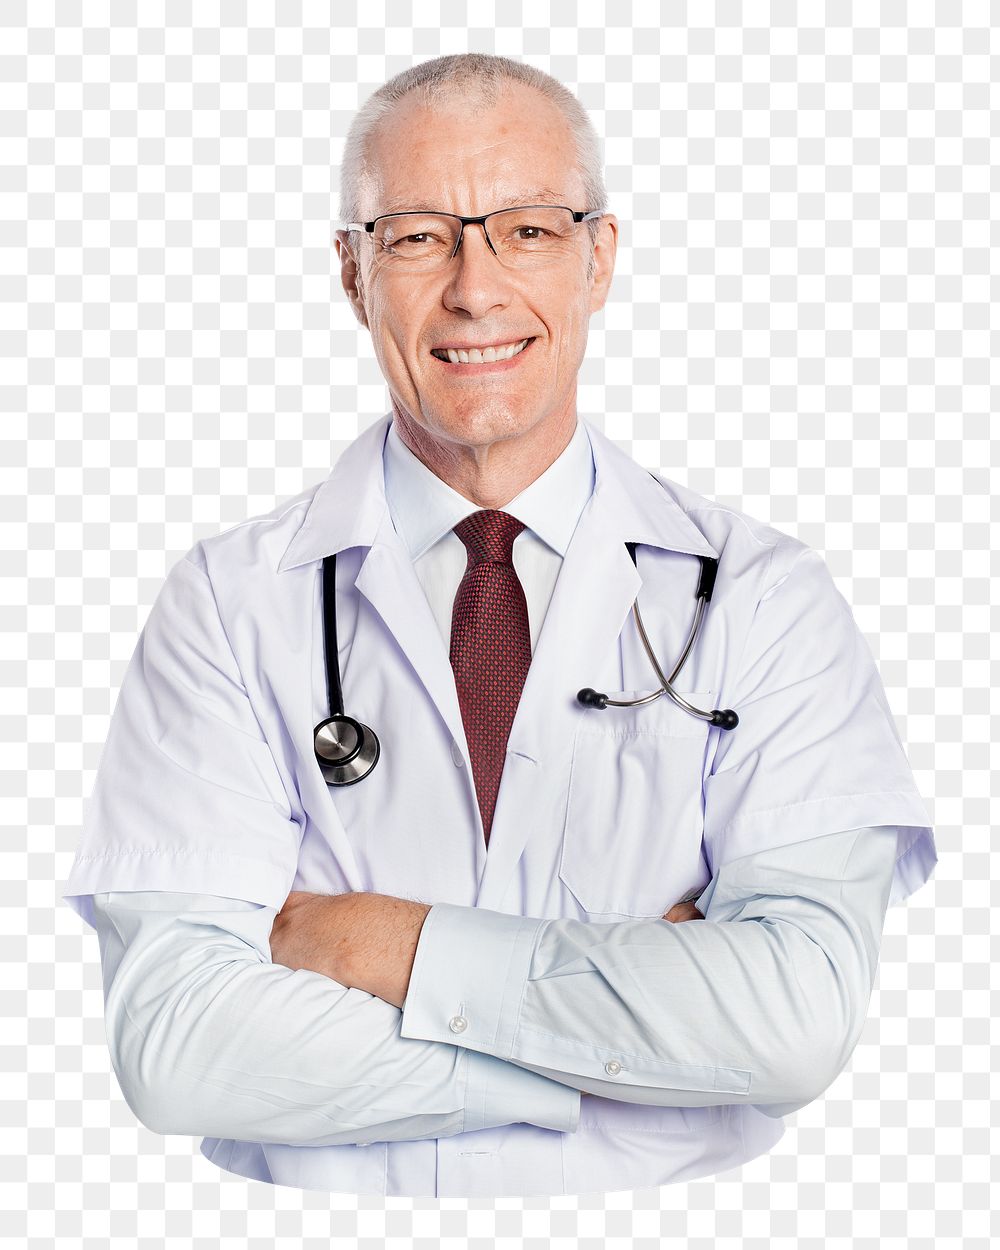 Male doctor png sticker, transparent background